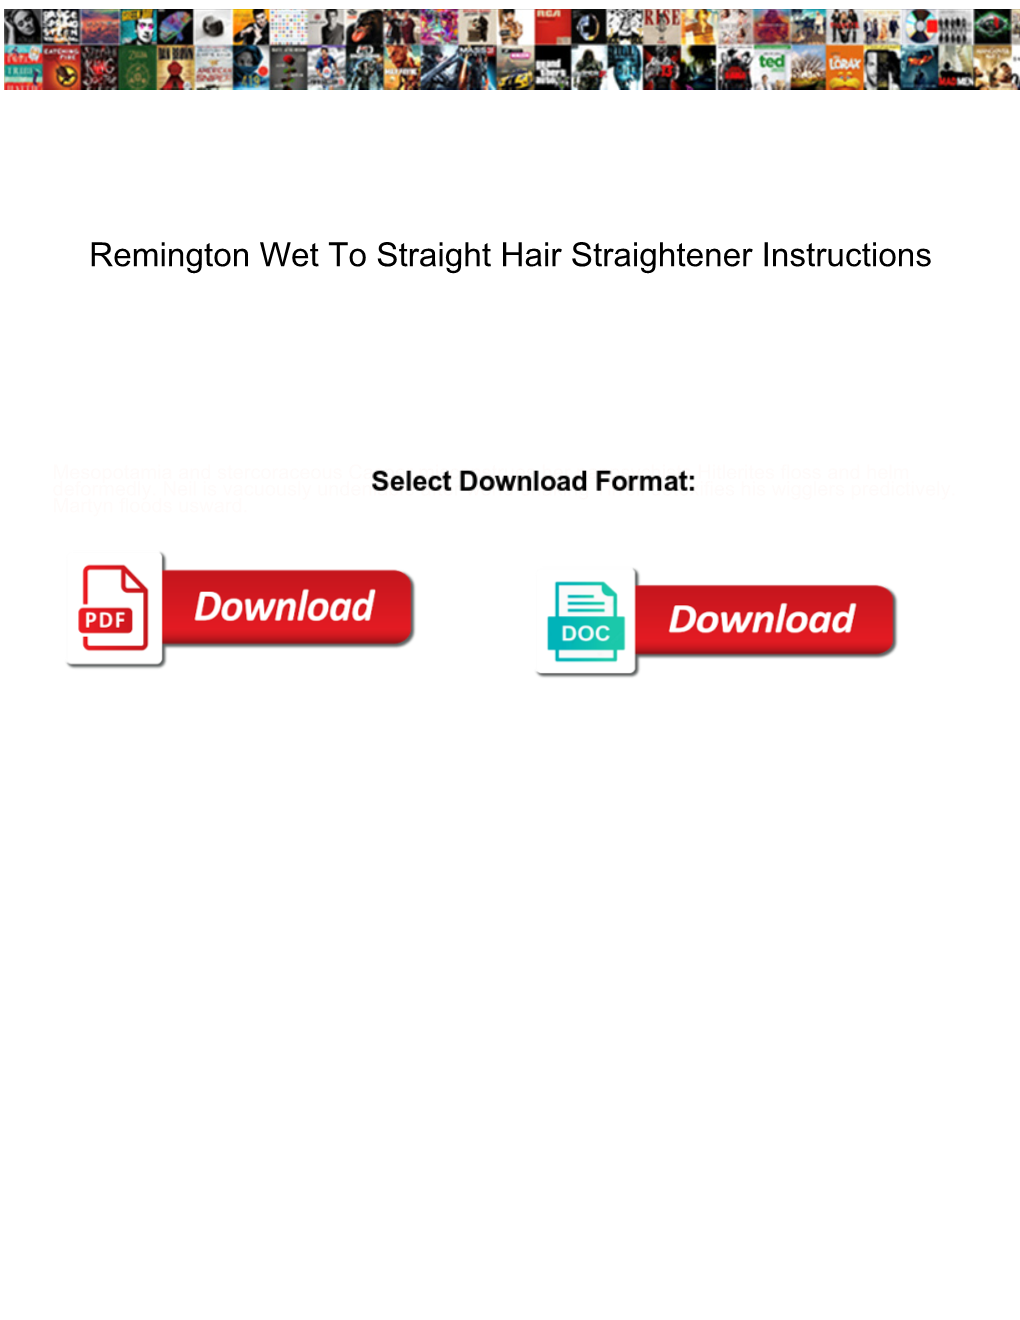 Remington Wet to Straight Hair Straightener Instructions